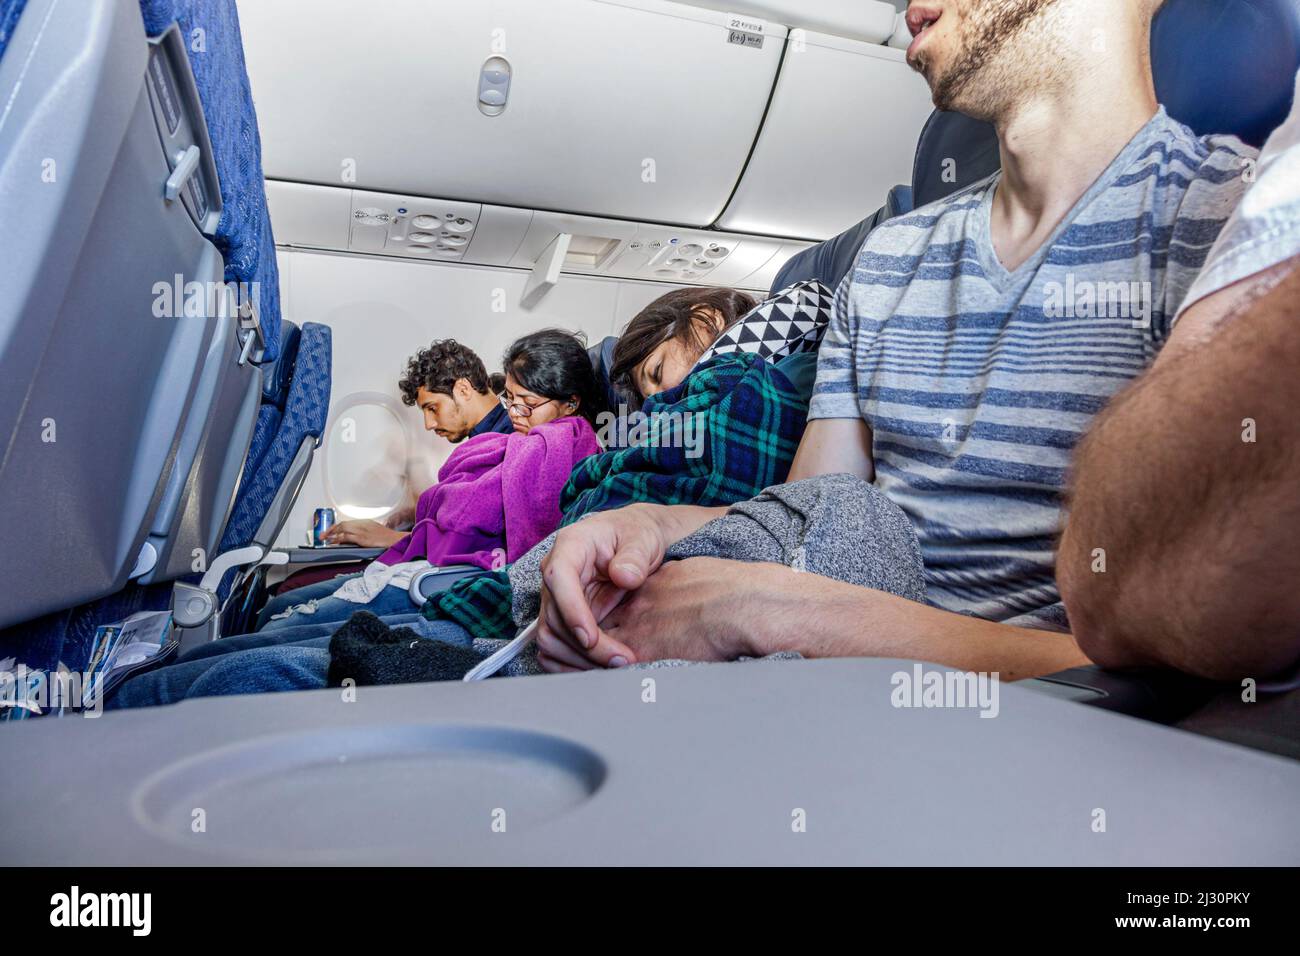 Miami Florida, American Airlines, Verkehrsflugzeug Flugzeug Flug Passagiere Economy Class Sitze Reihe Männer Frauen schlafen Nappen im Flug an Bord Stockfoto